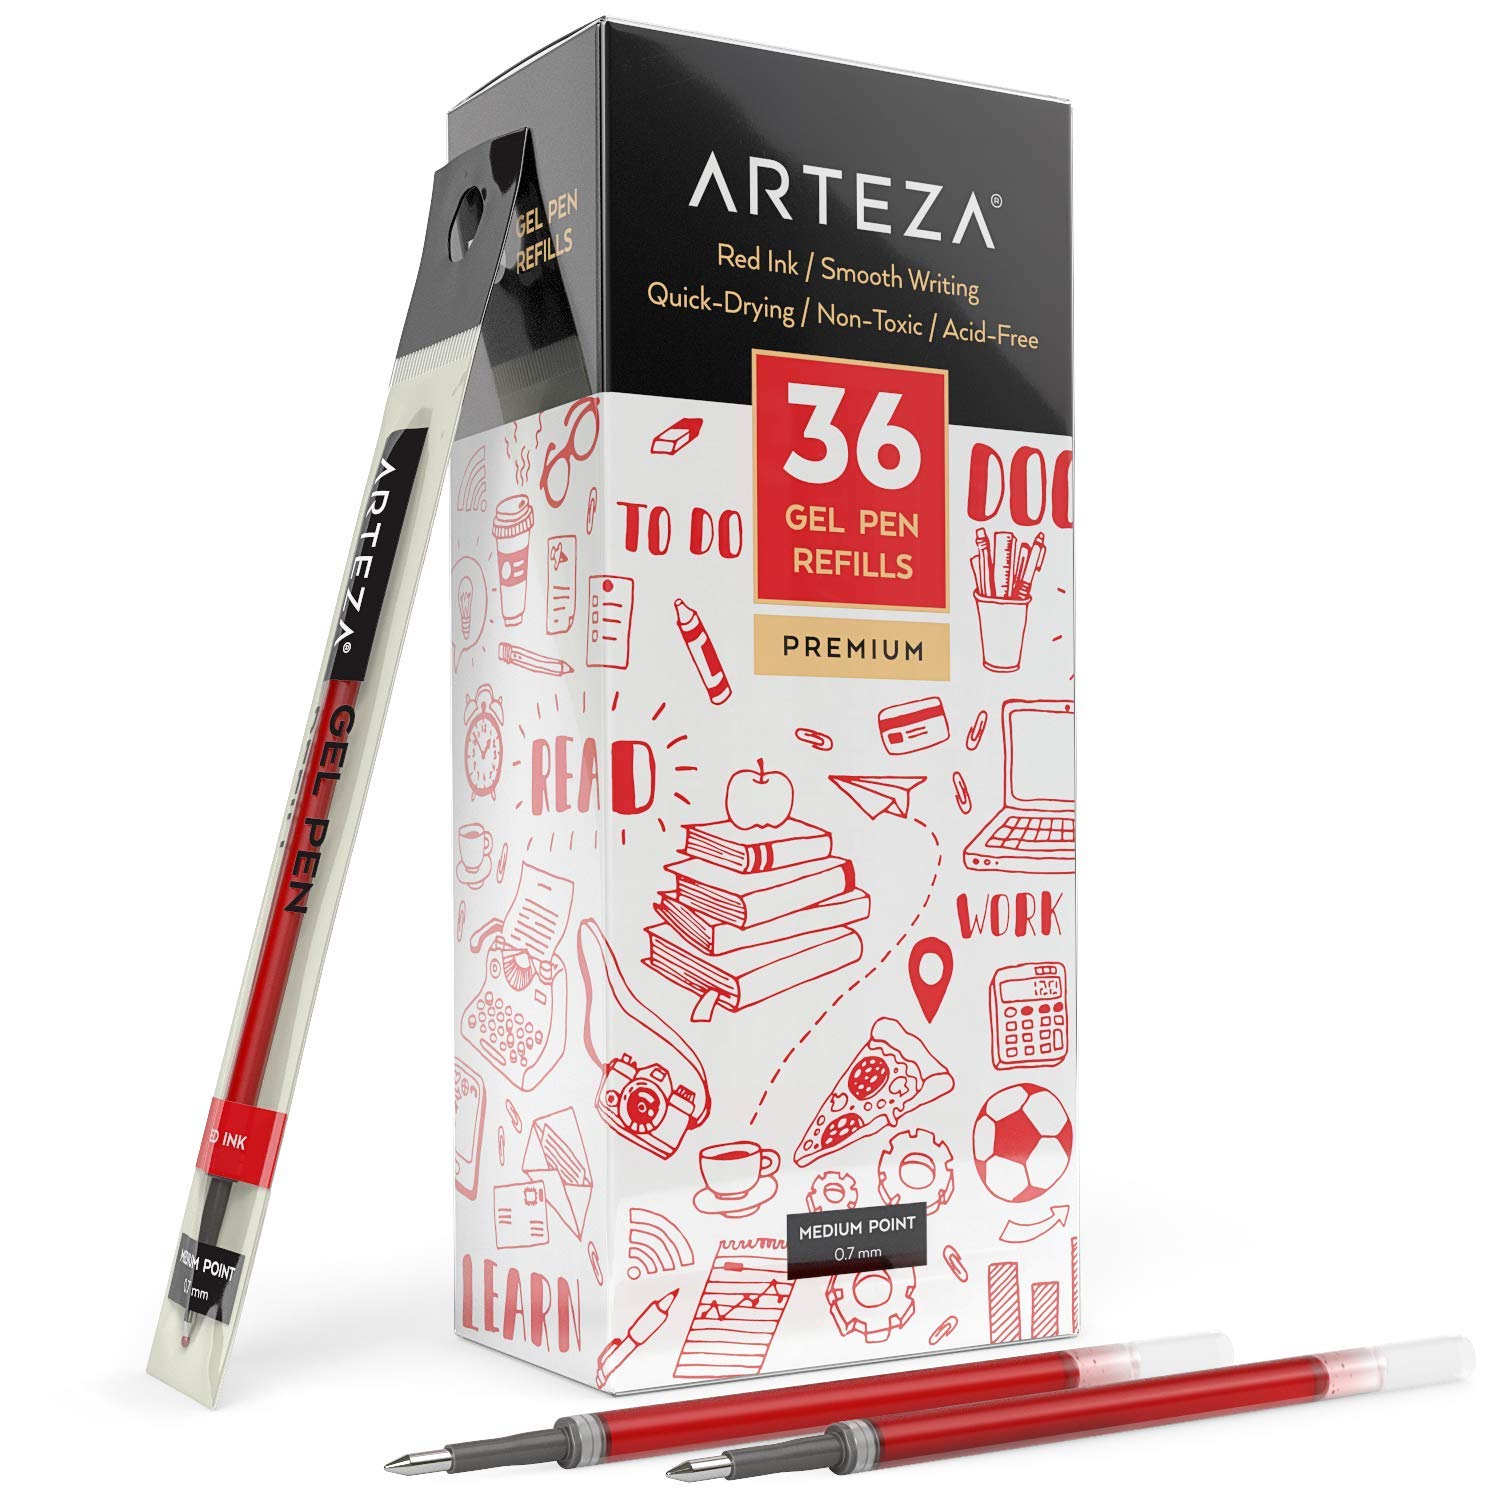 ARTEZA Gel Pen Refills, Pack of 36 Red Roller Ball Gel Ink Pen Refills, Quick-Drying, Nontoxic, Fine Point, Office Supplies for 